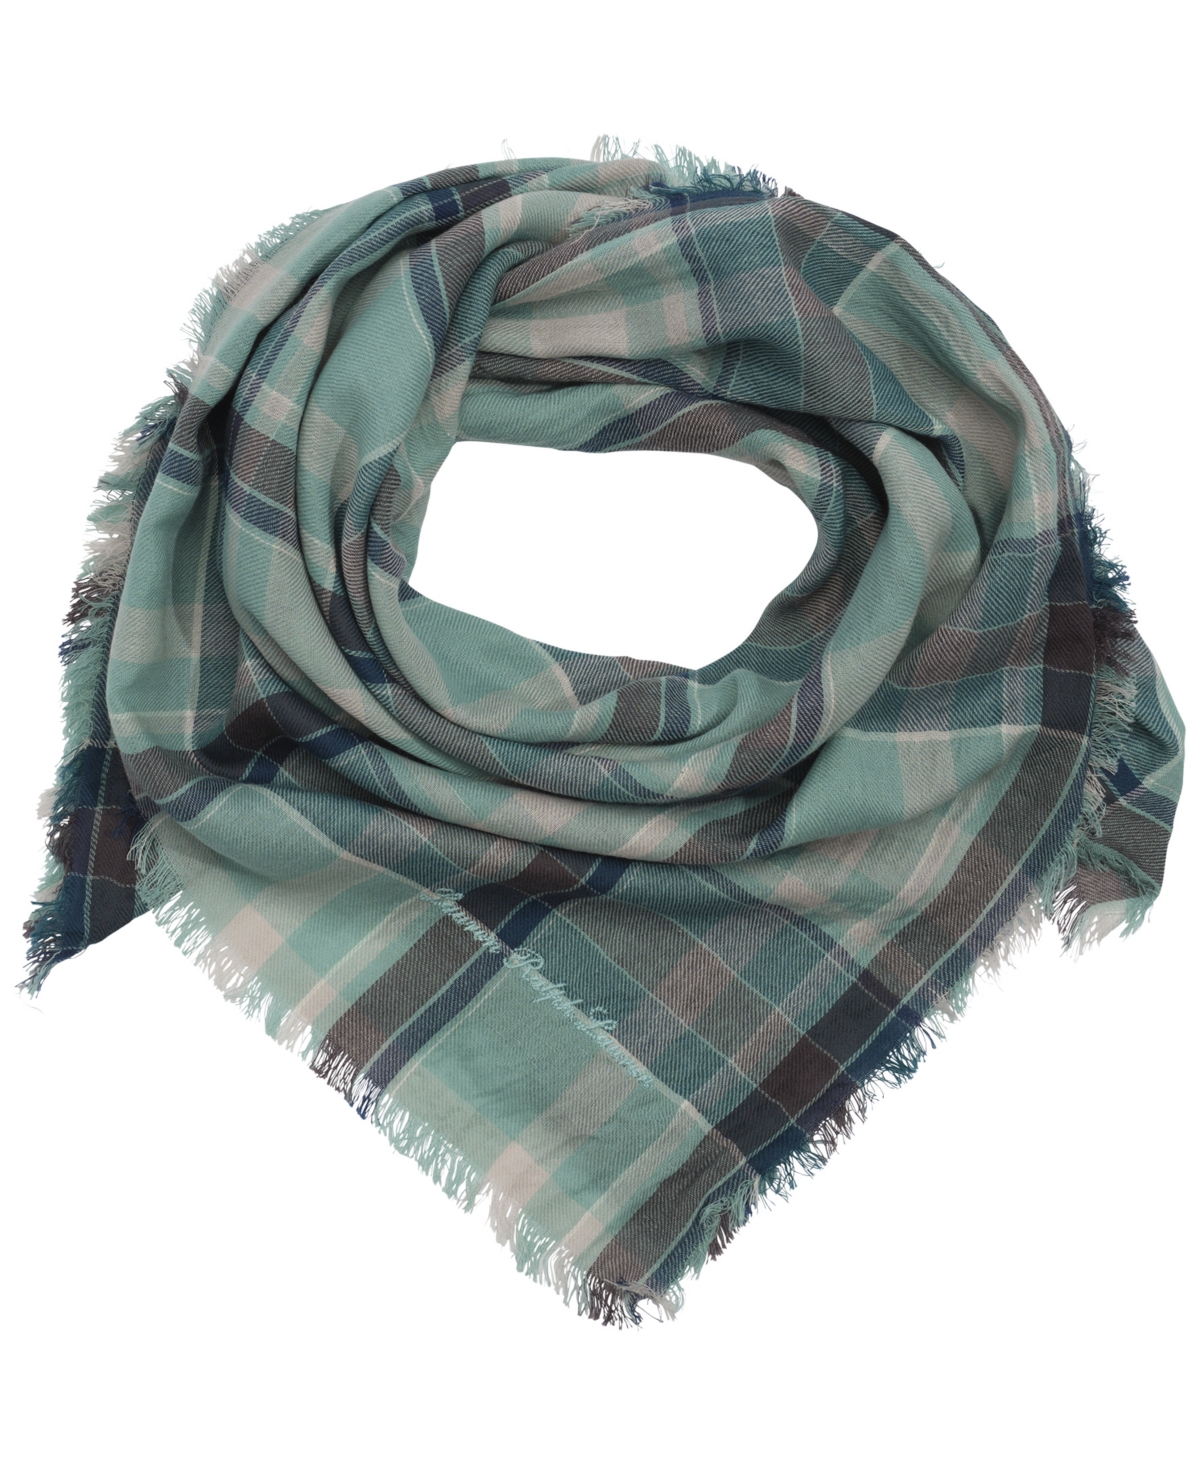 woven plaid square scarf - Pale Turq